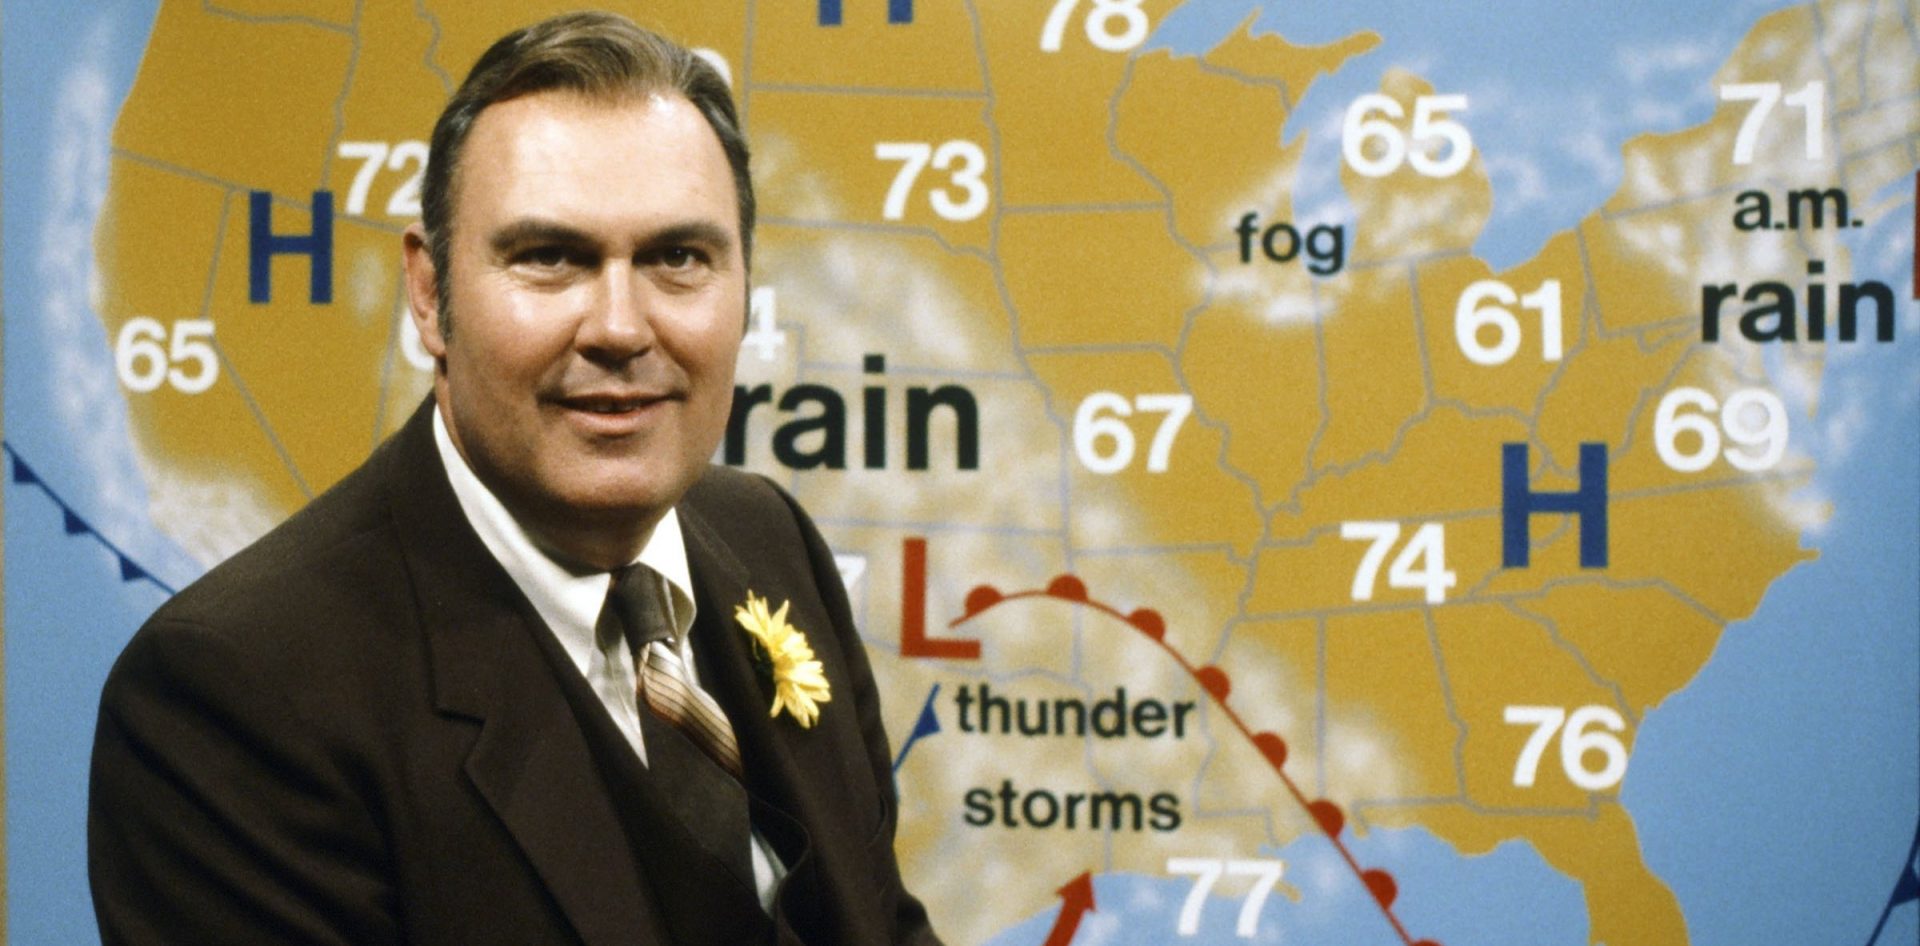 Willard Scott became the Today show's weatherman in 1980